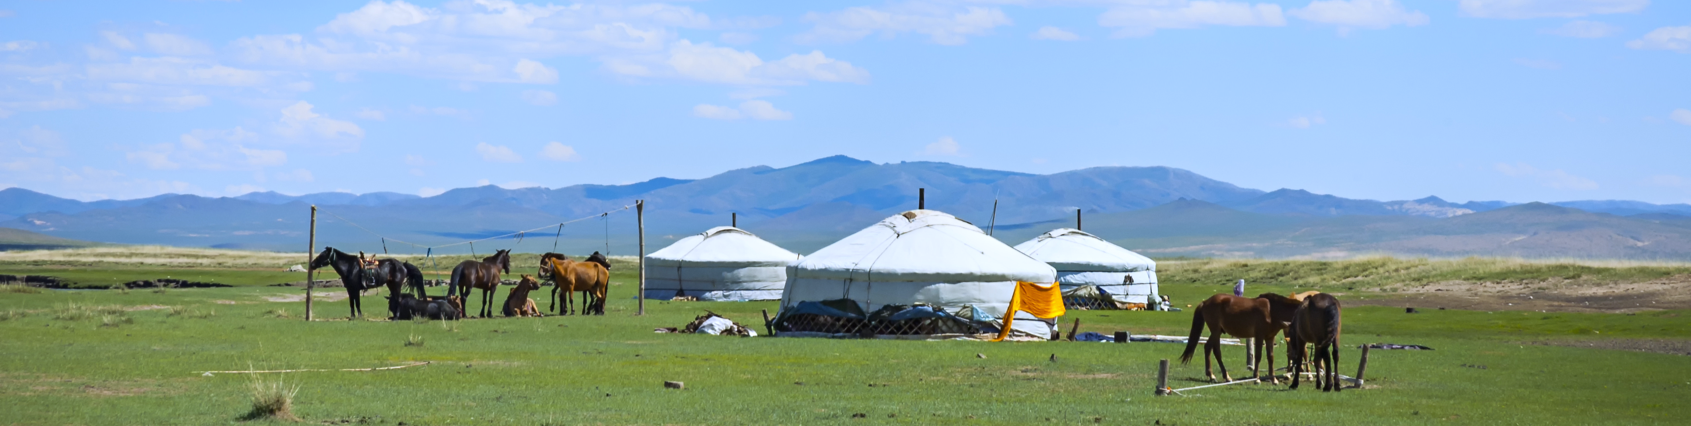 mongolia nature nomad countryside